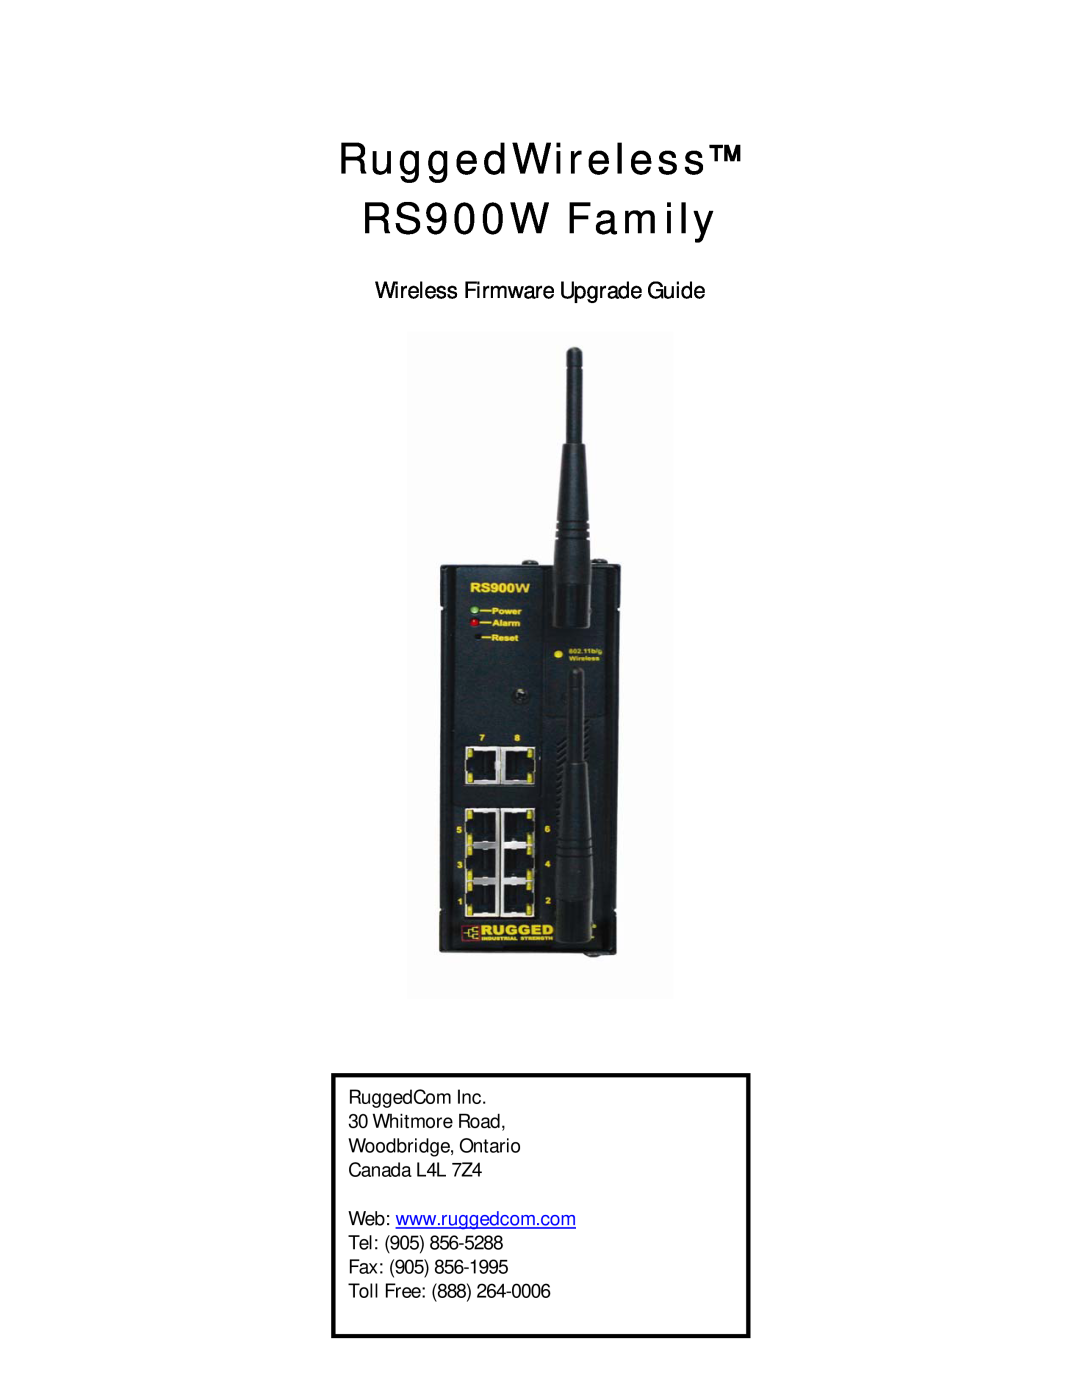 RuggedCom warranty RuggedWirelessTM RS900W, Wireless Ethernet with Integrated 8-Port Managed Switch 